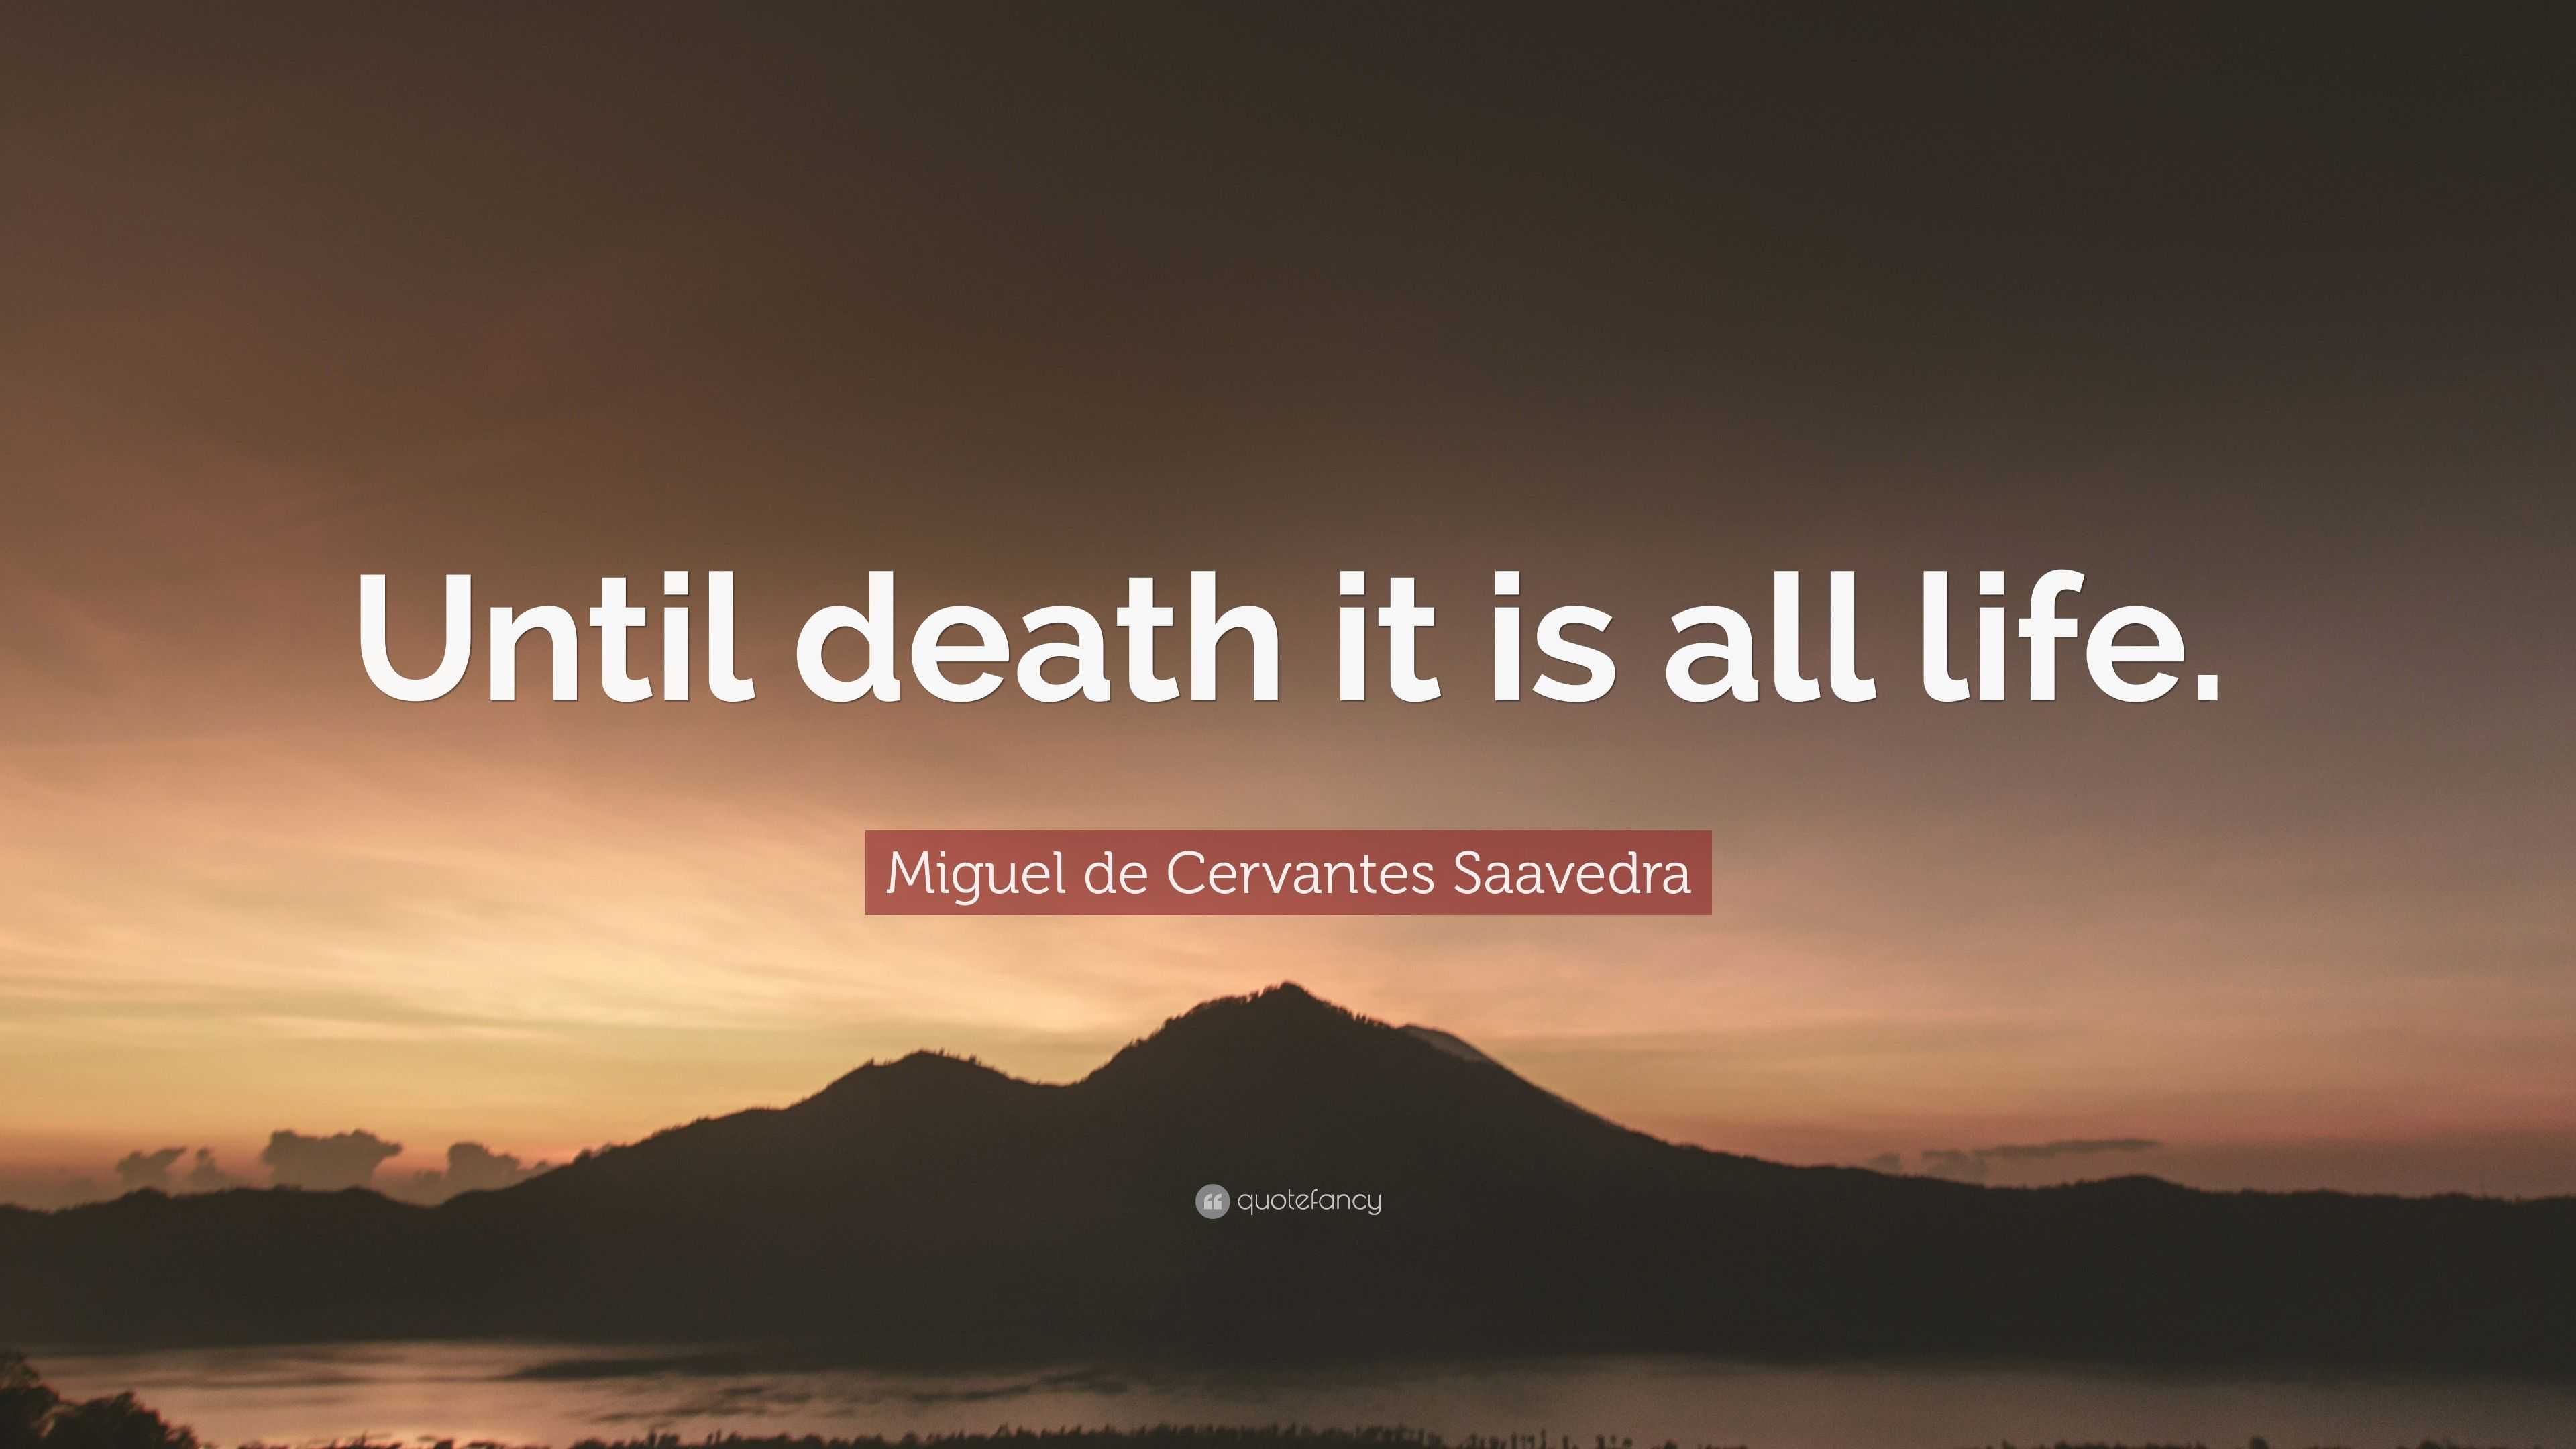 Miguel de Cervantes Saavedra Quote: “Until death it is all life.”